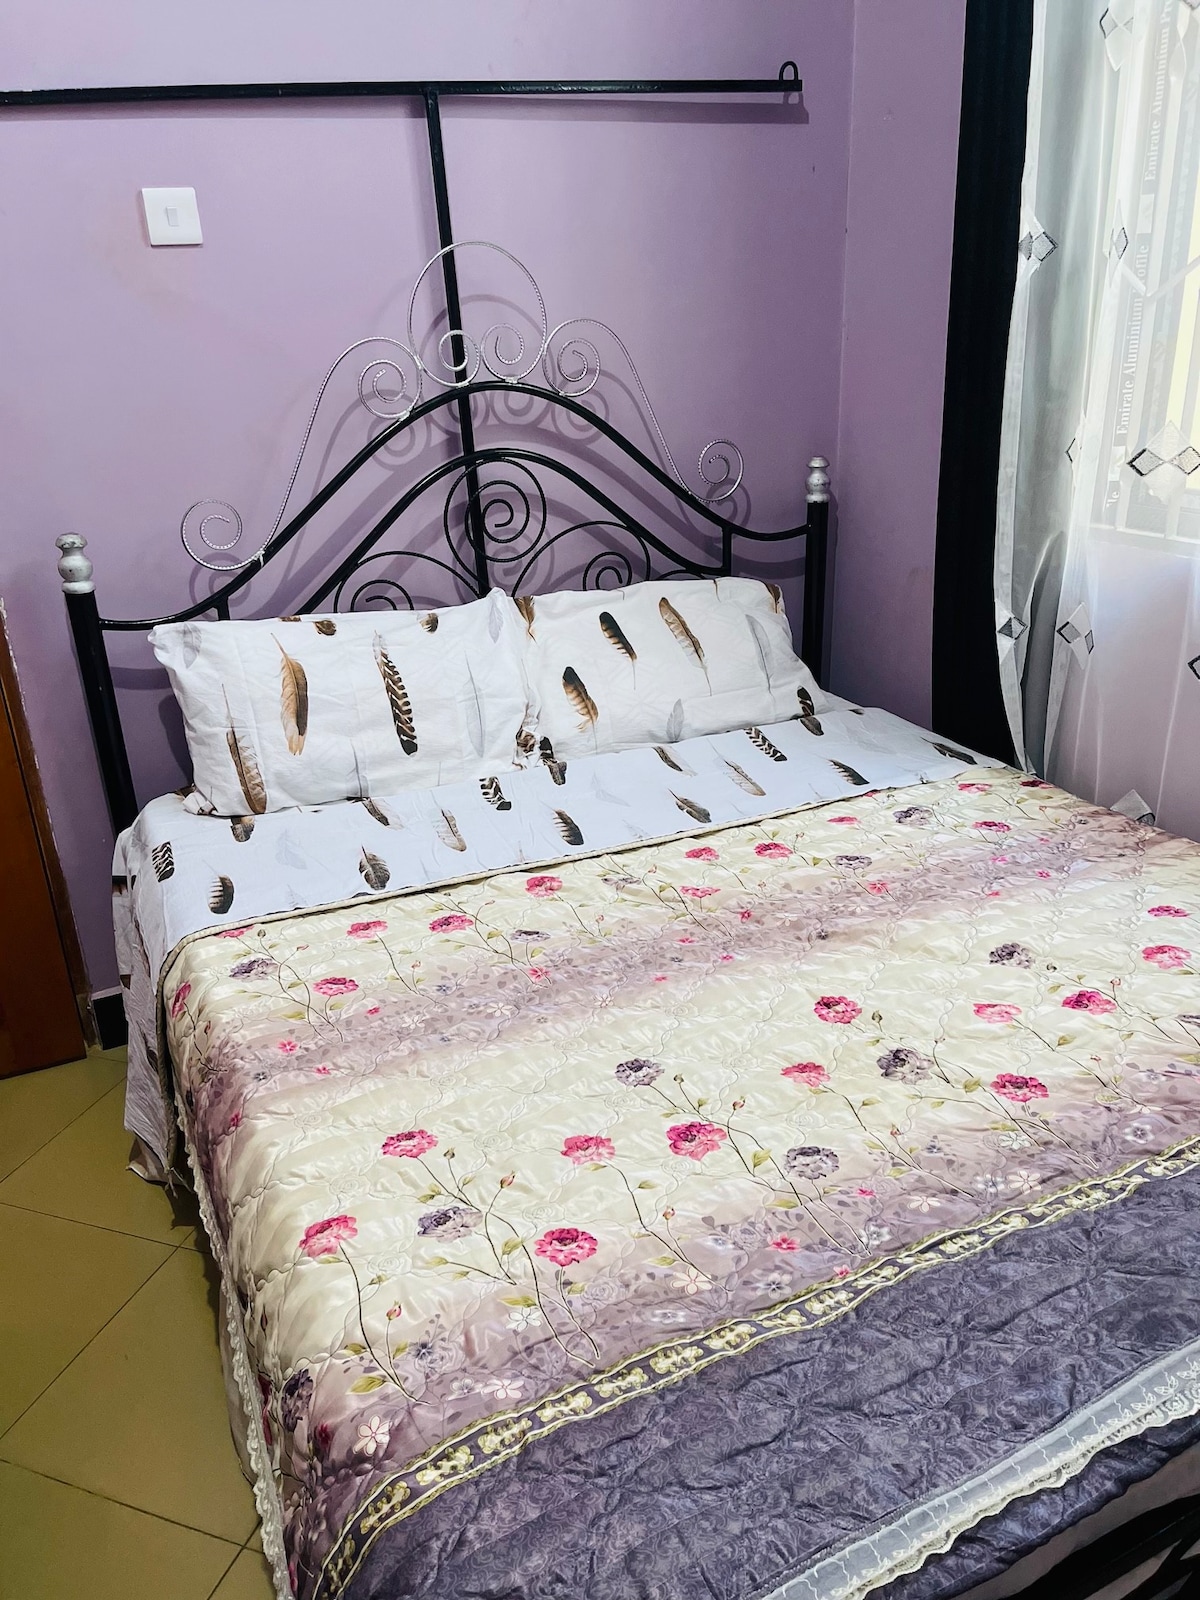 Room in Babati, Manyara
Stay with Jonester